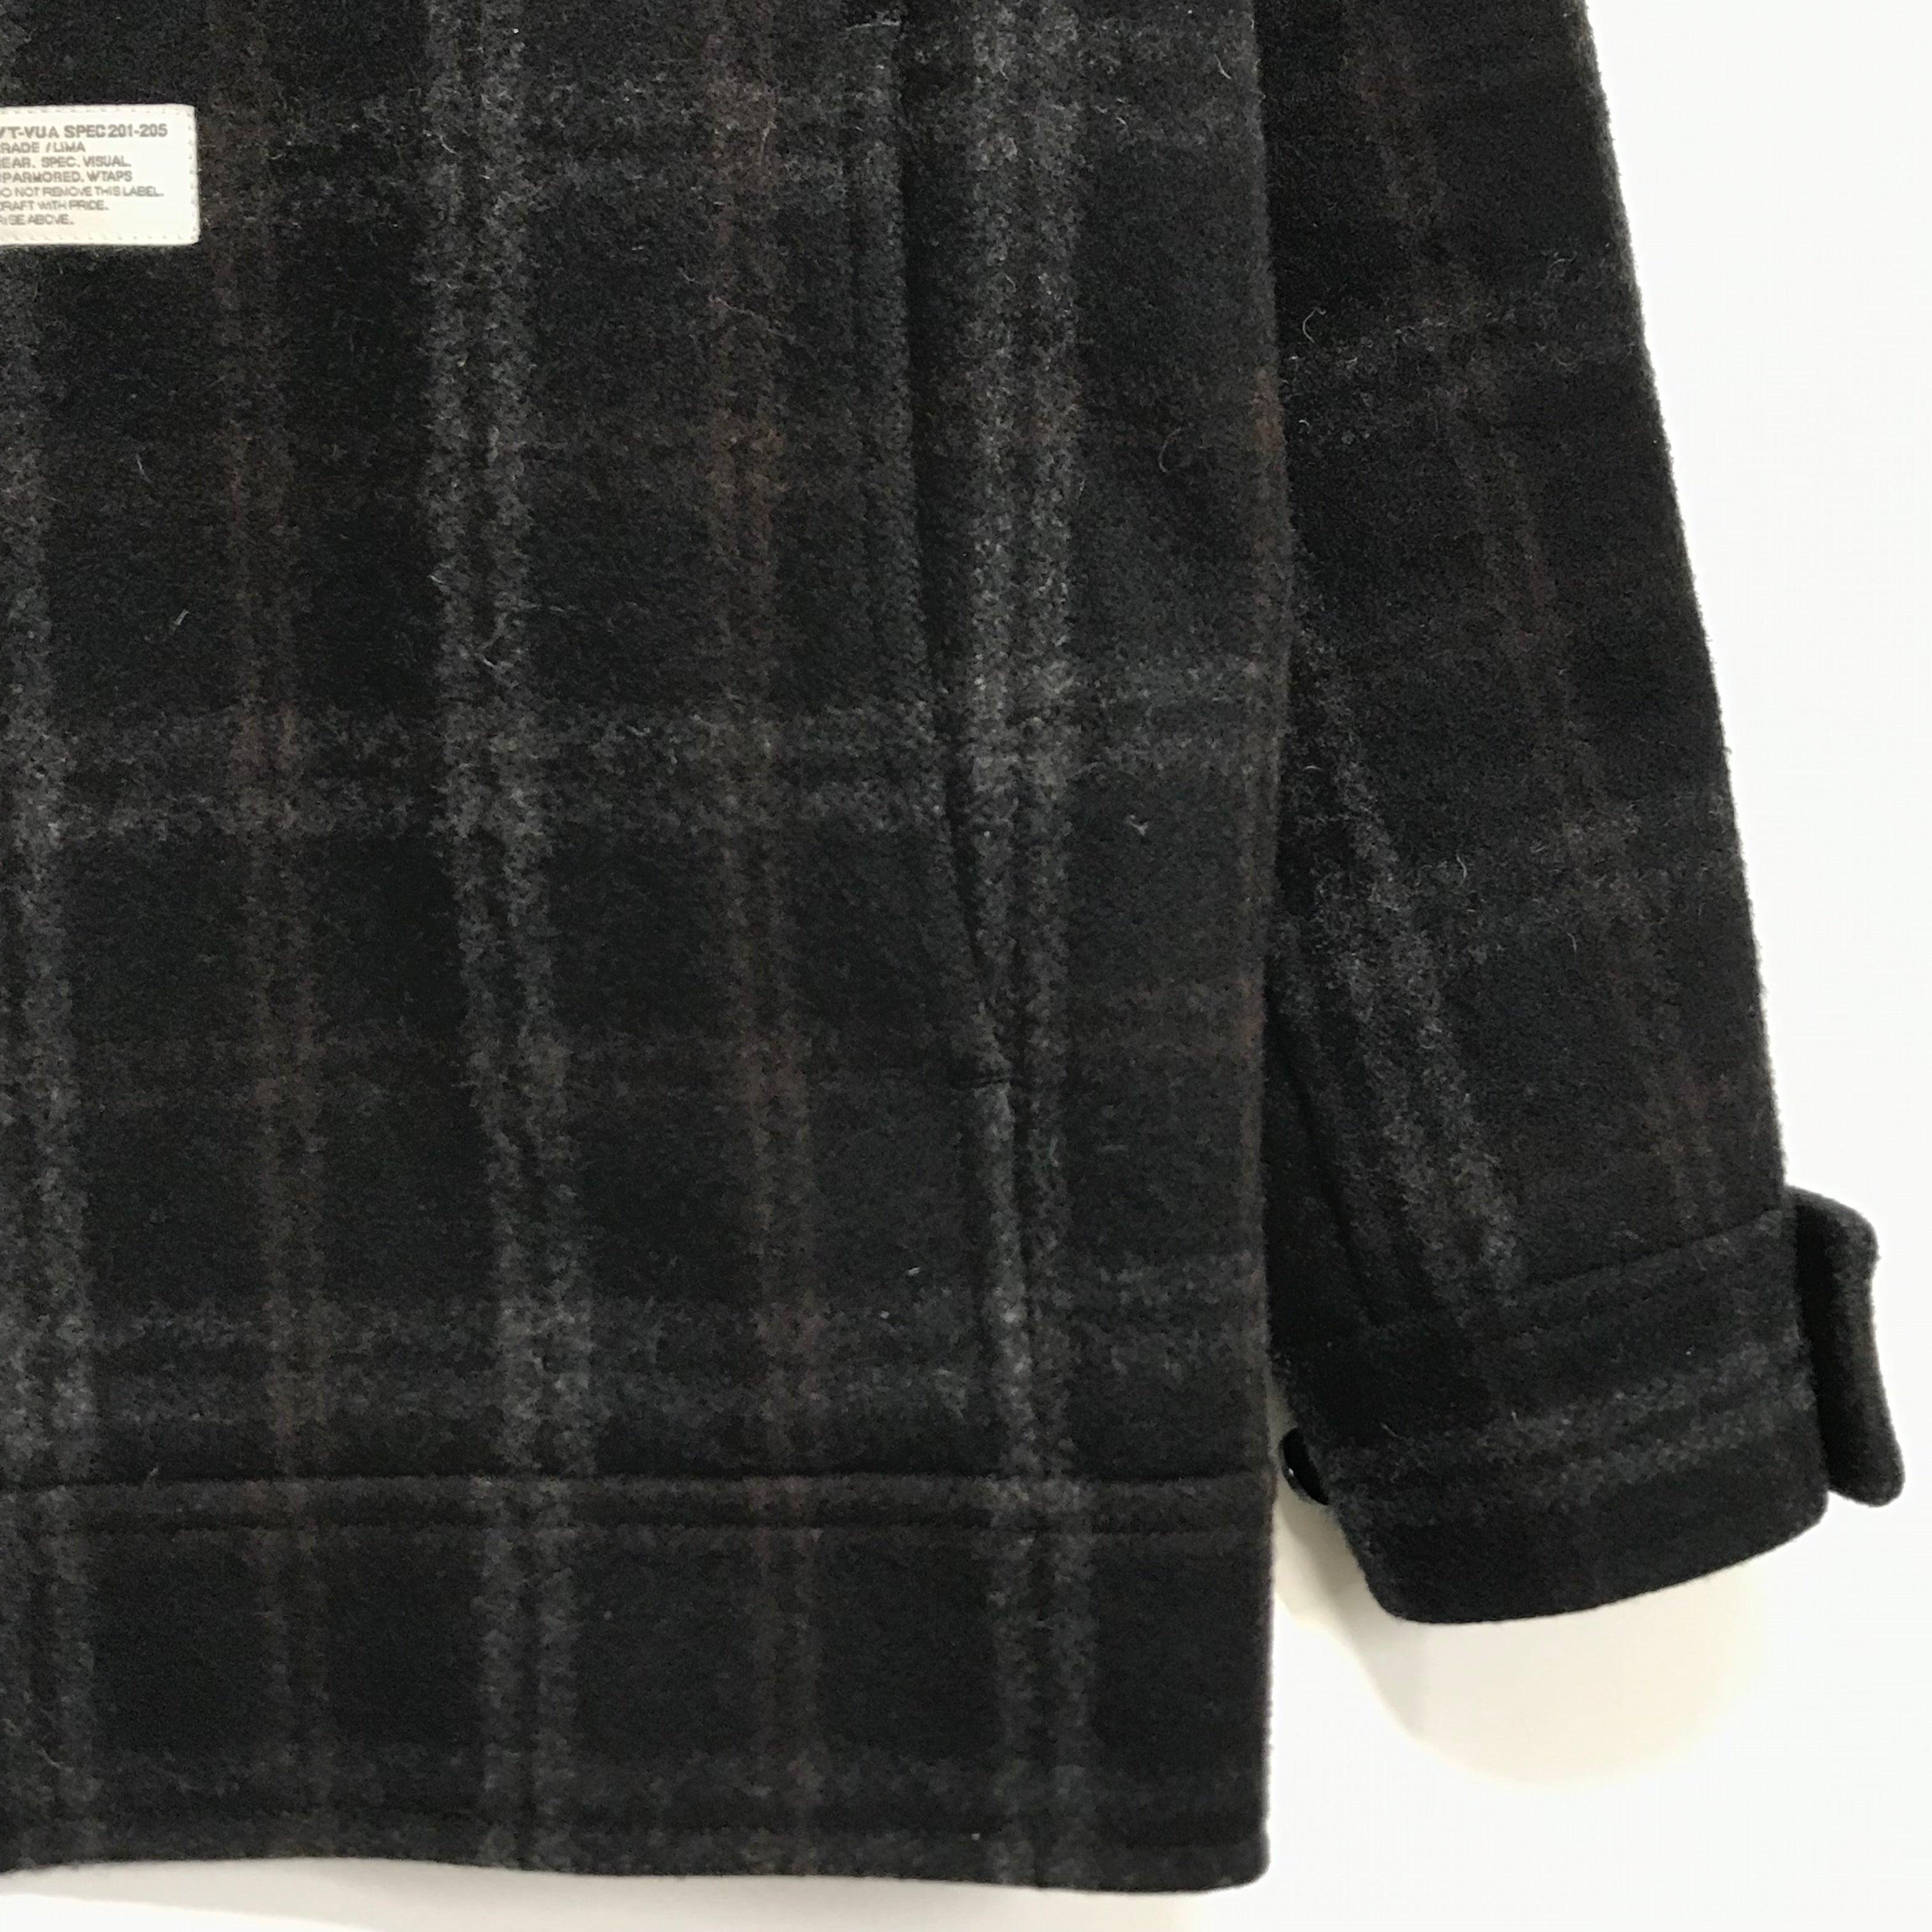 L] WTaps 10AW Melton Wool Grease Jacket Black – StylisticsJapan.com